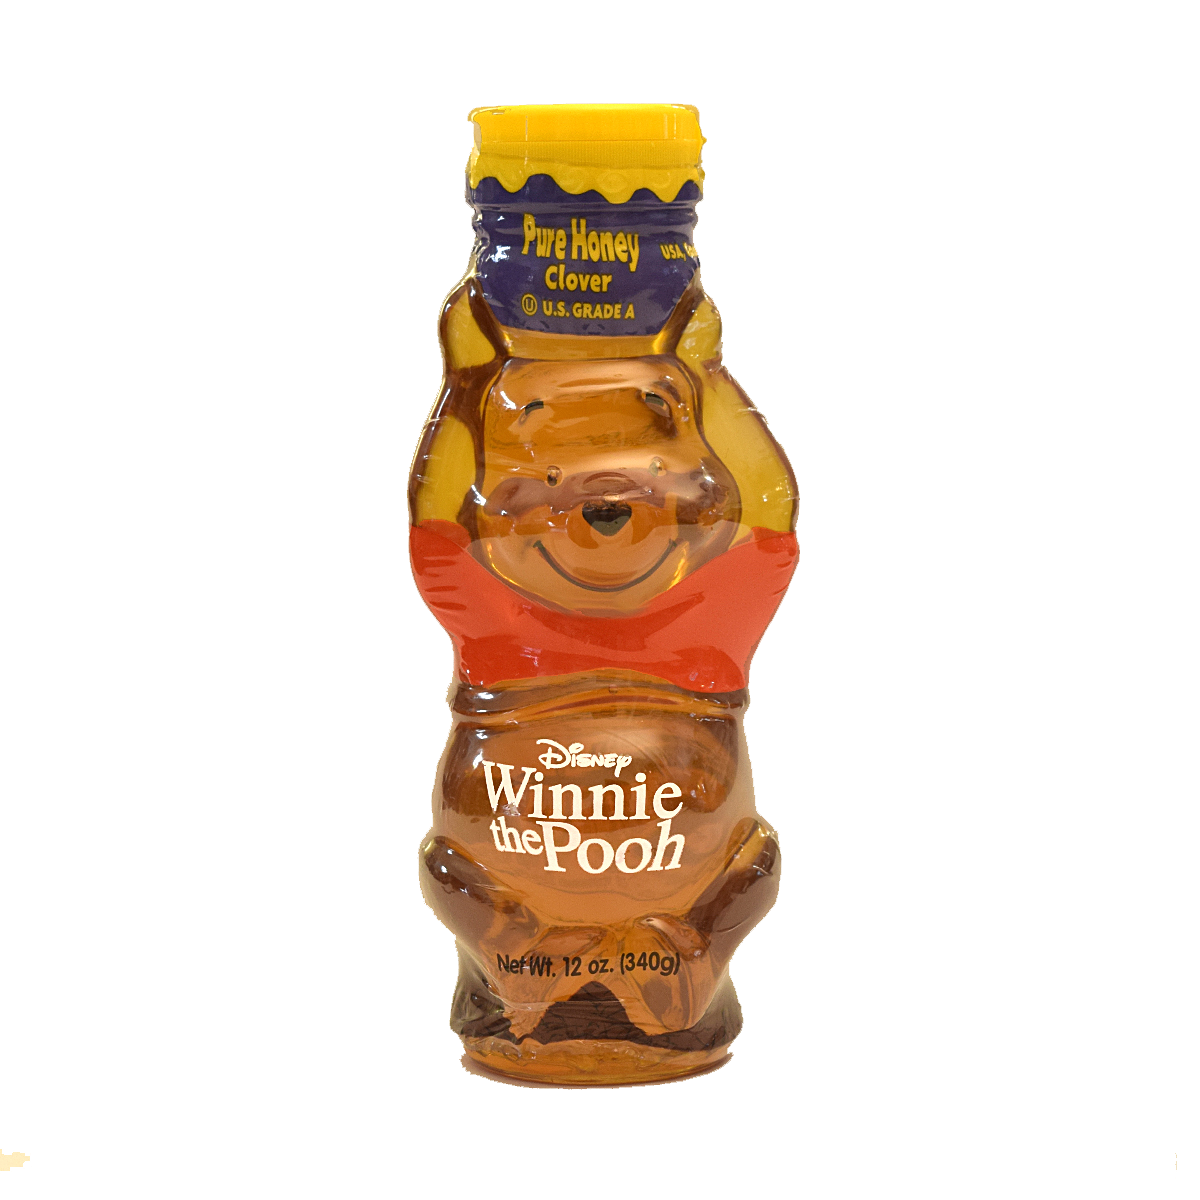 Disney Winnie the Pooh Honey Bear, 12oz Pure Clover Honey, No Allergens Contained - image 1 of 5